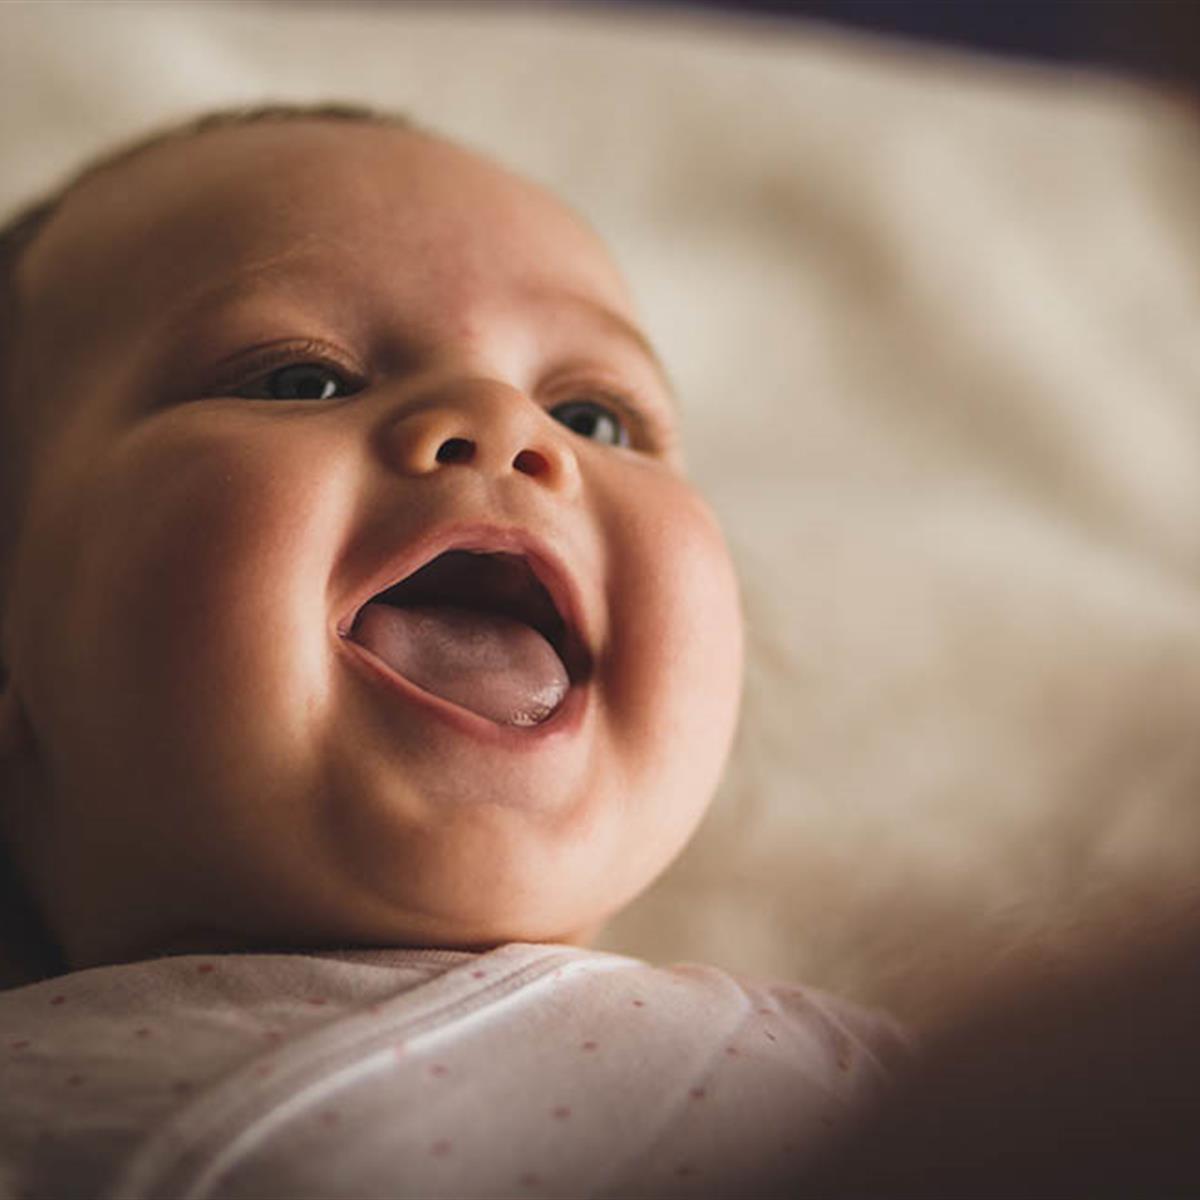 Emotional &amp; Social Development in Babies: Birth to 3 Months - HealthyChildren.org